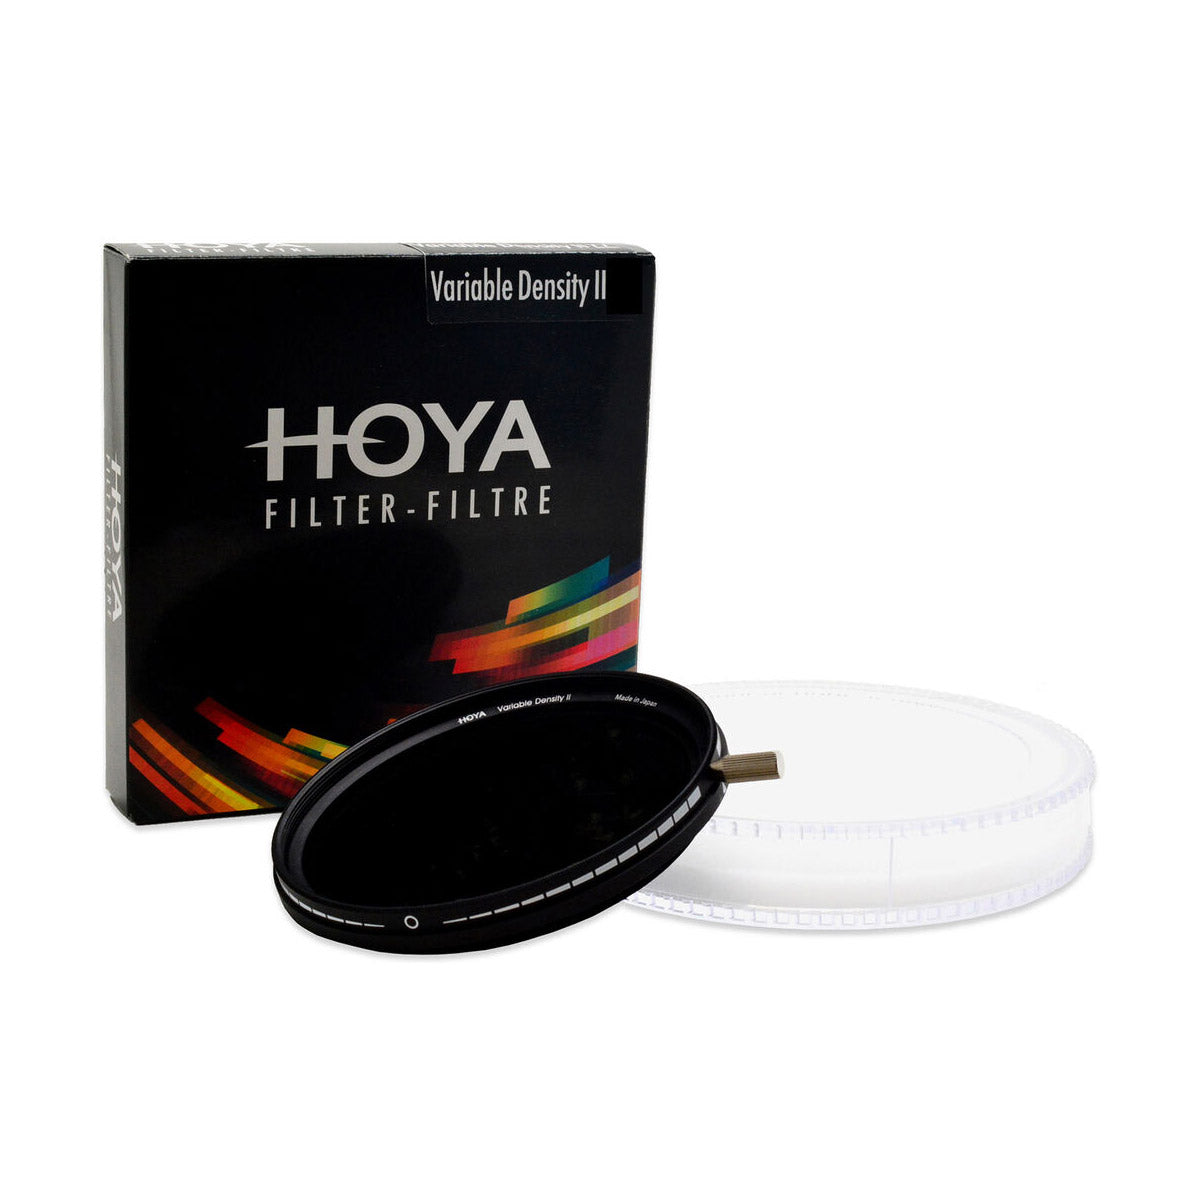 Hoya 77mm Variable Density II ND Filter